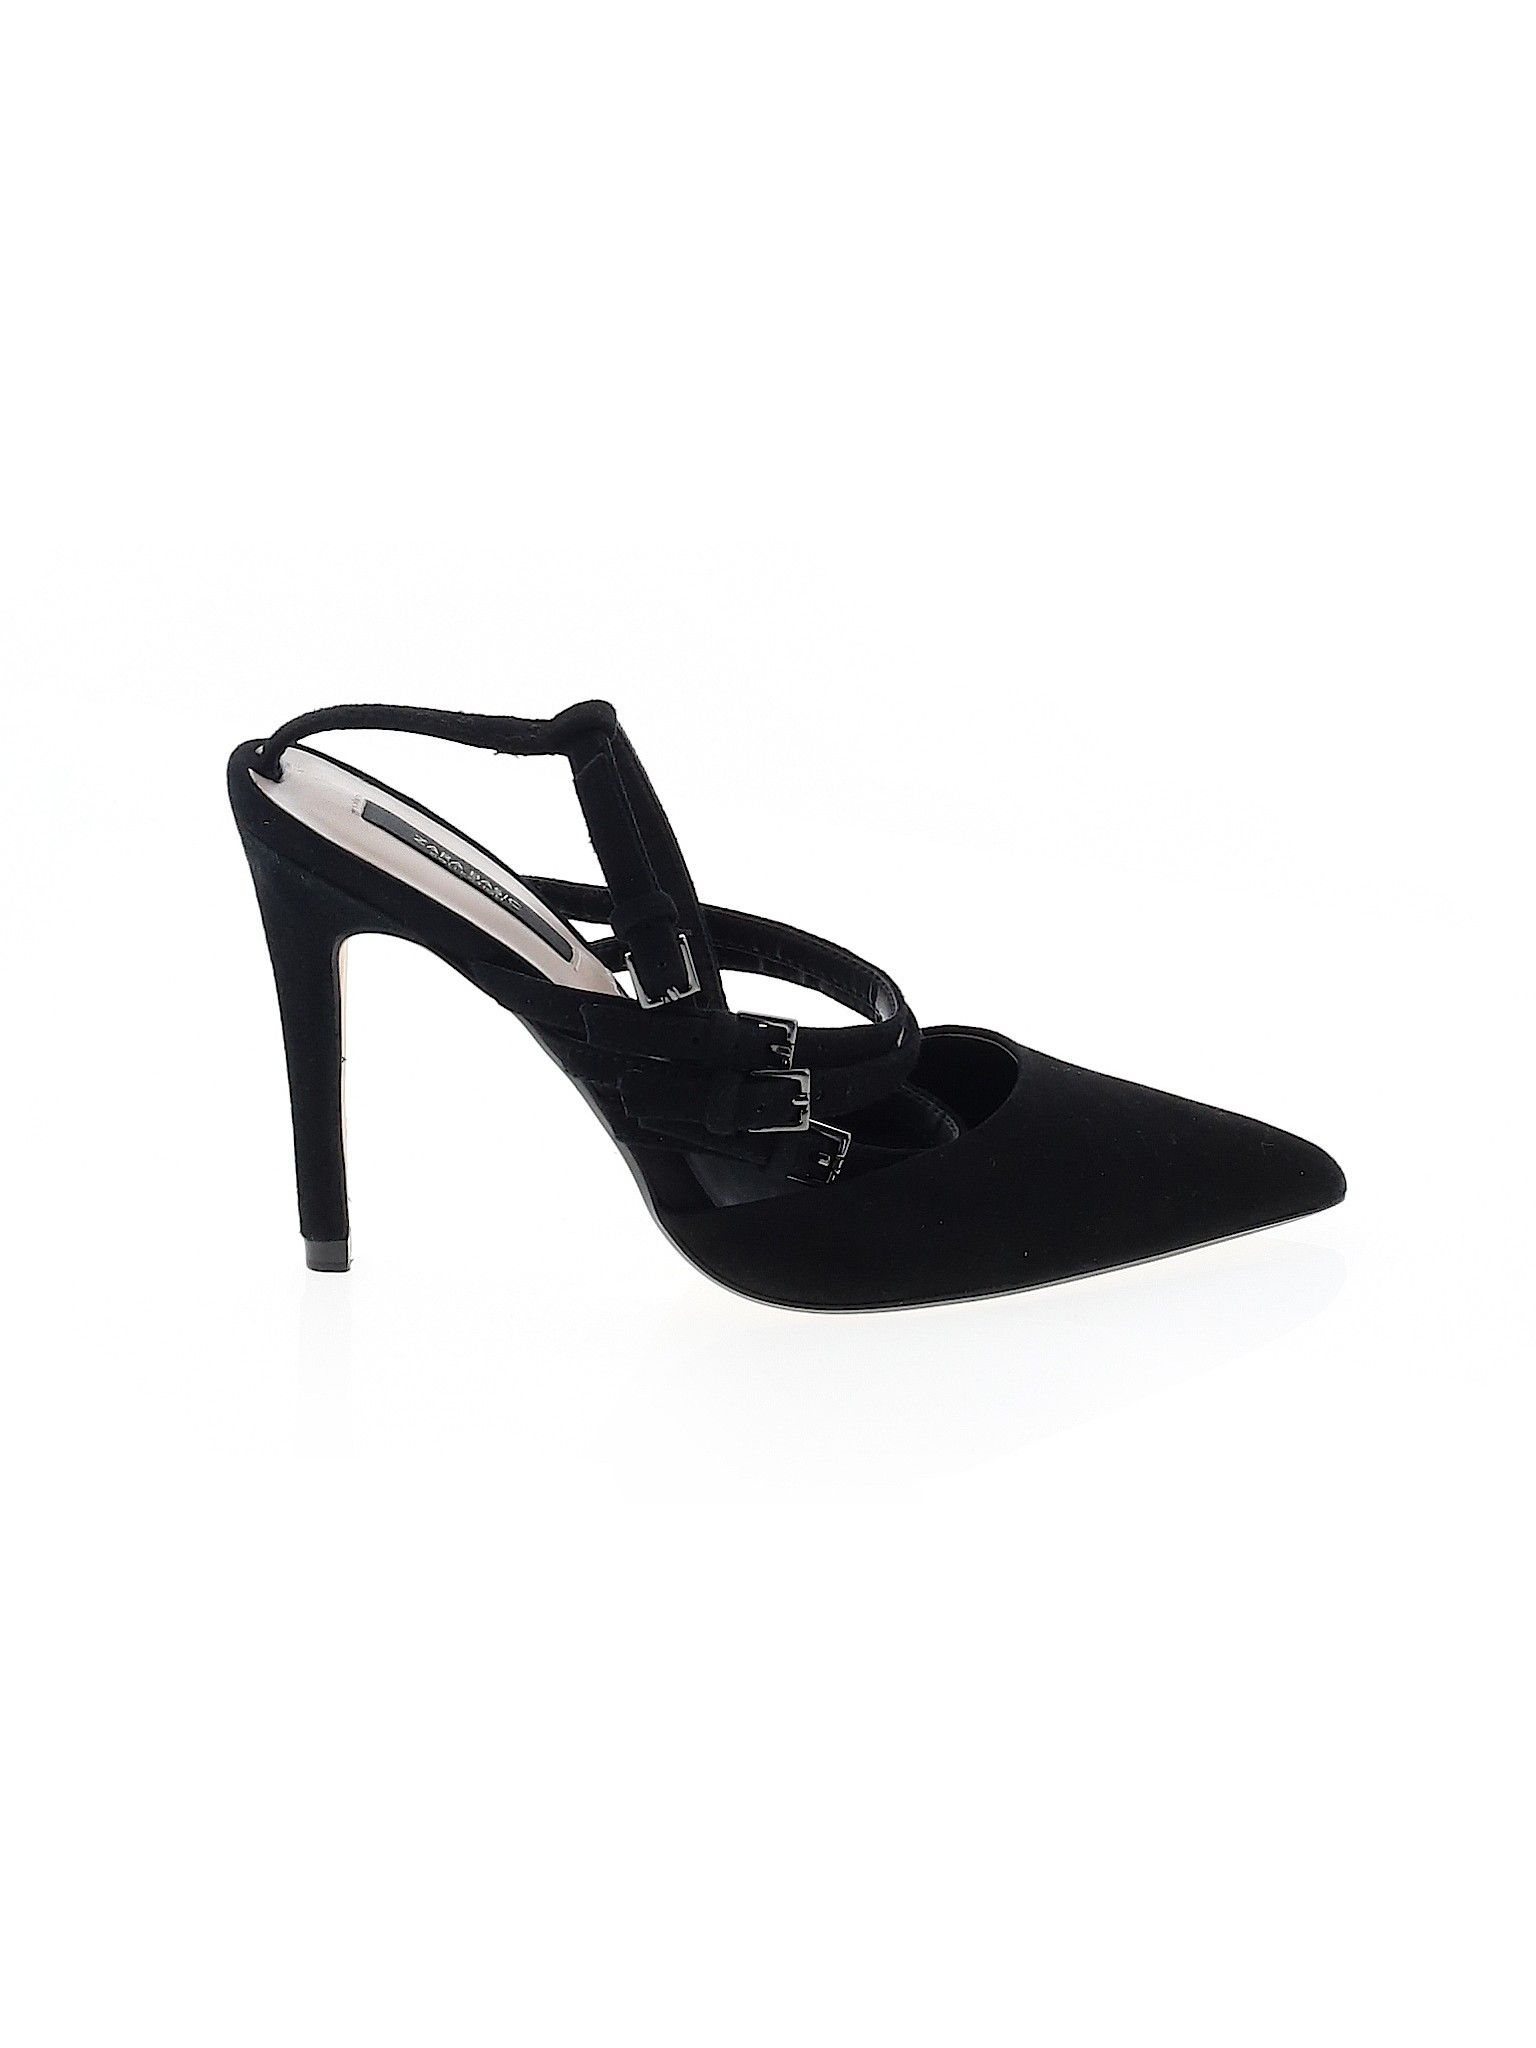 Zara Basic Heels Size 7: Black Women's Clothing - 55195185 | thredUP